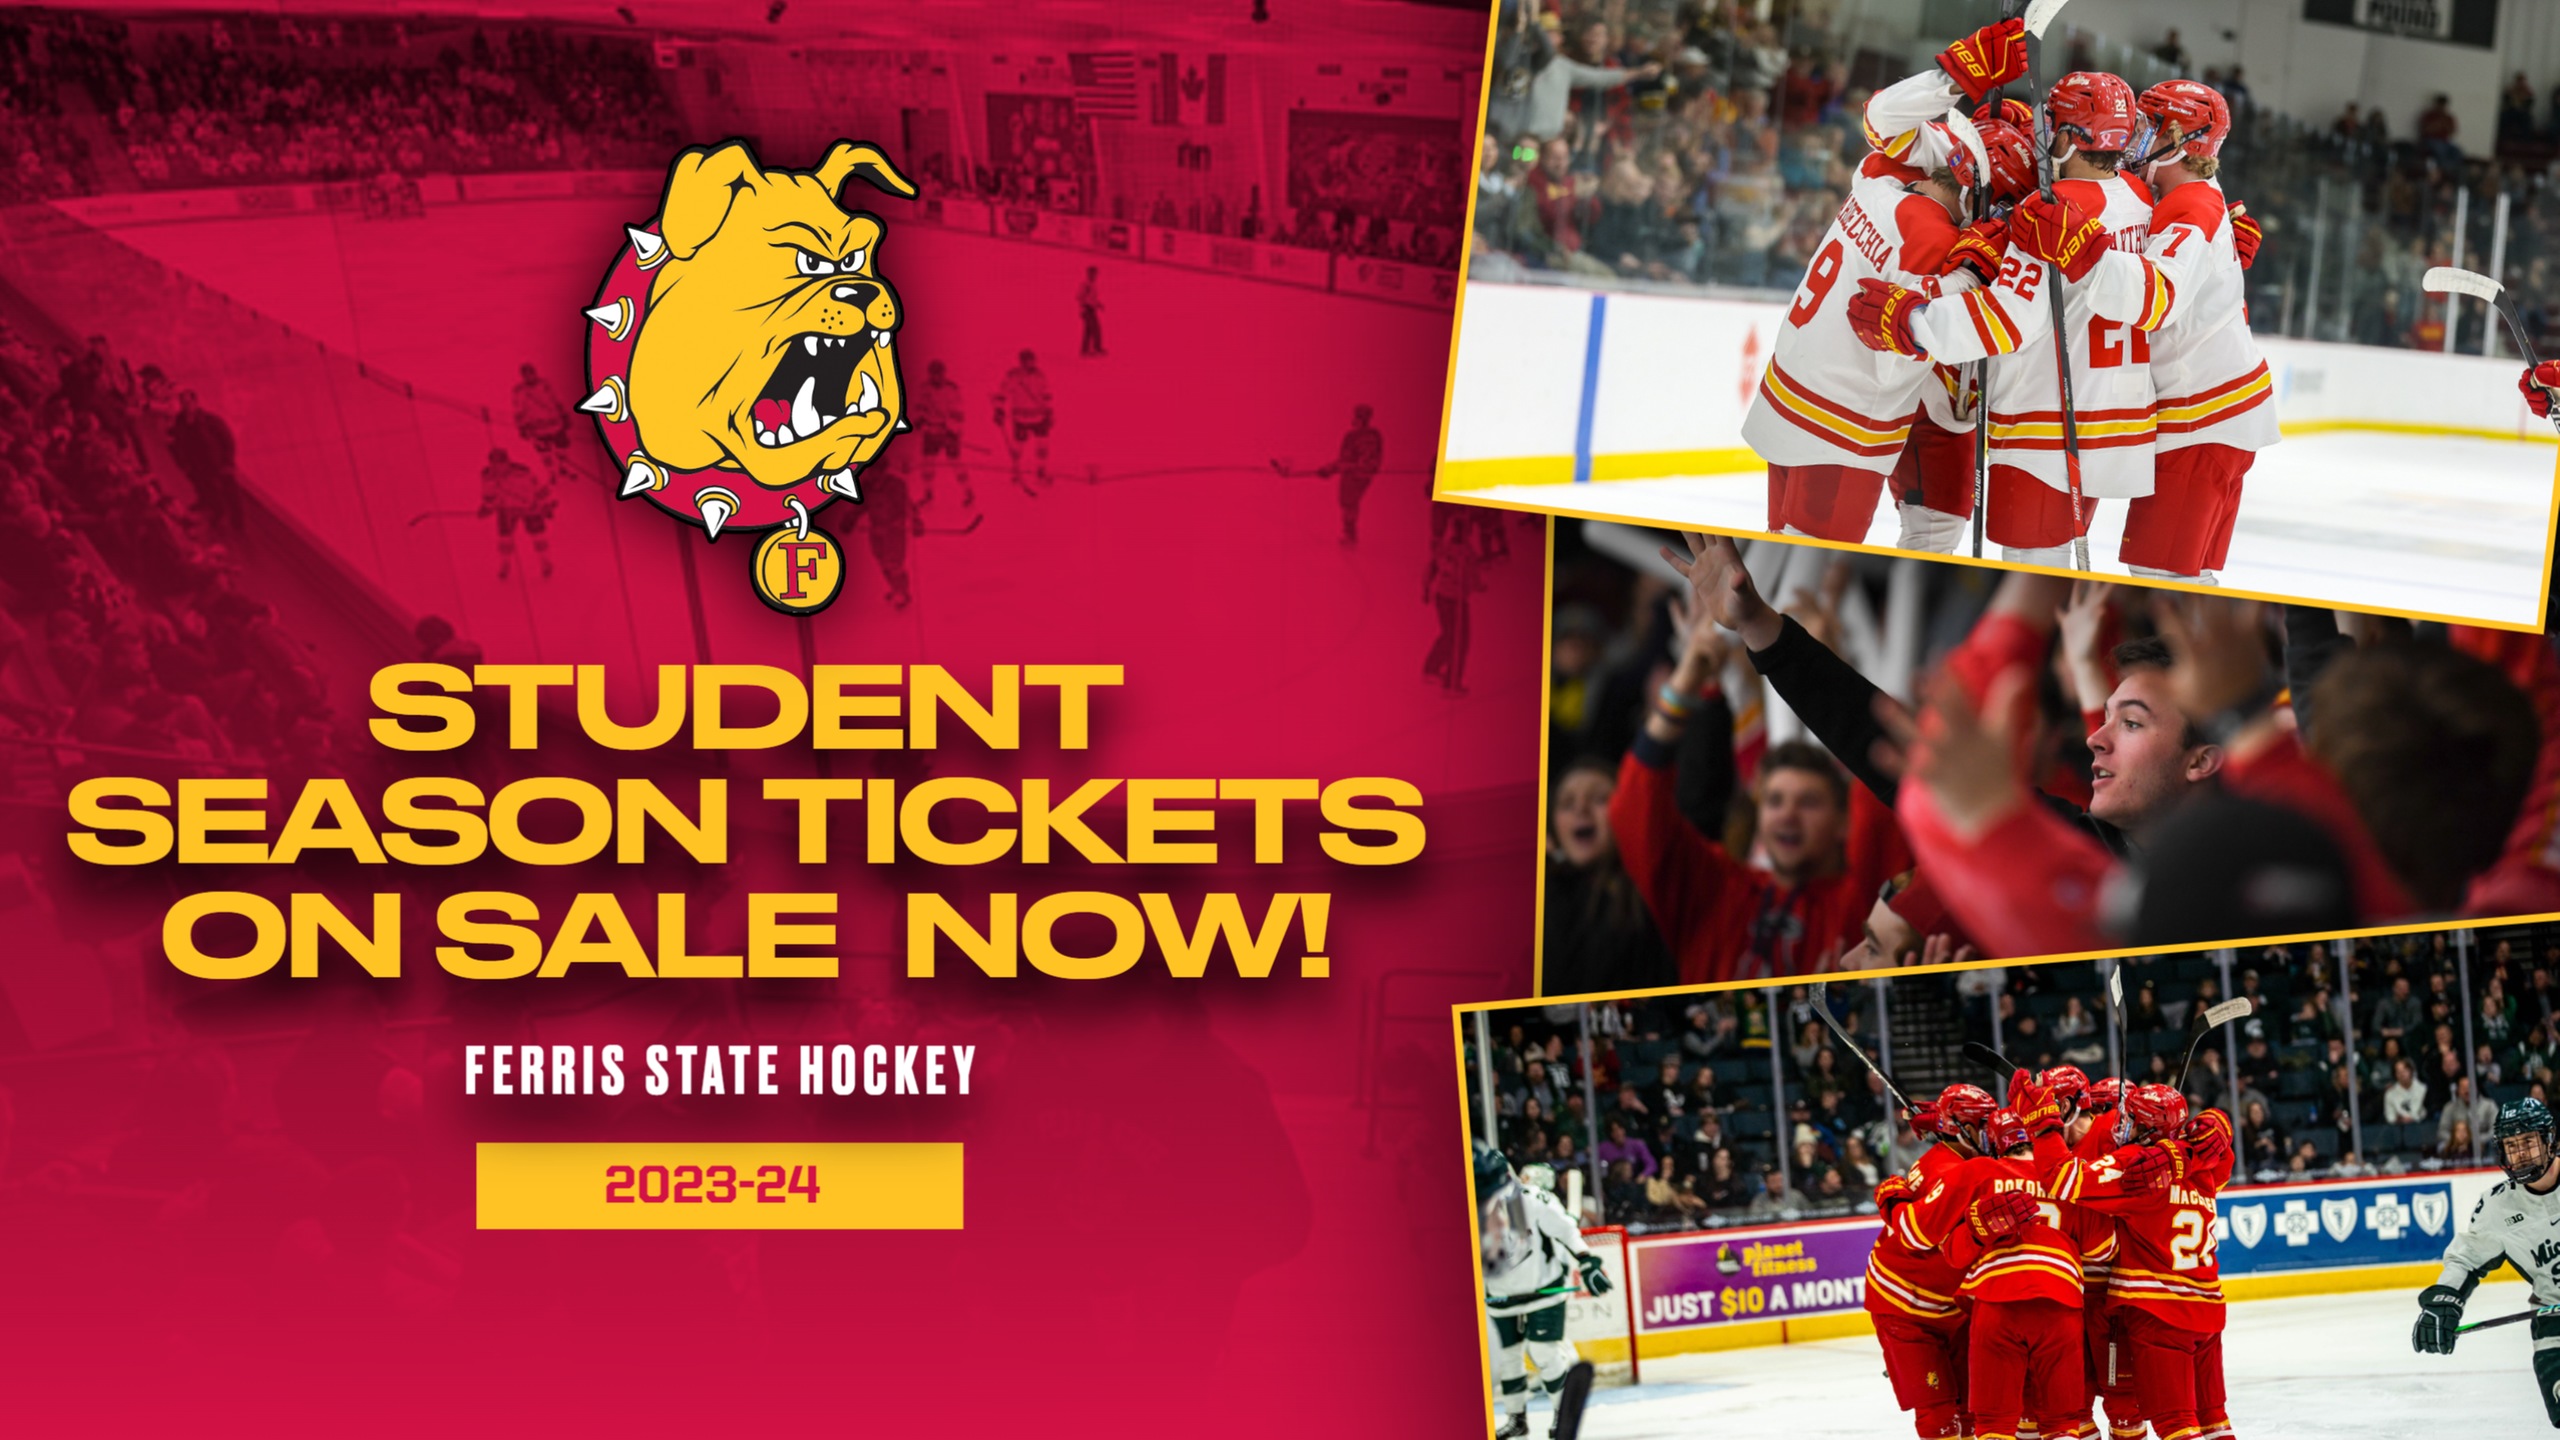 Ferris State Hockey Student Season Tickets On Sale Now!